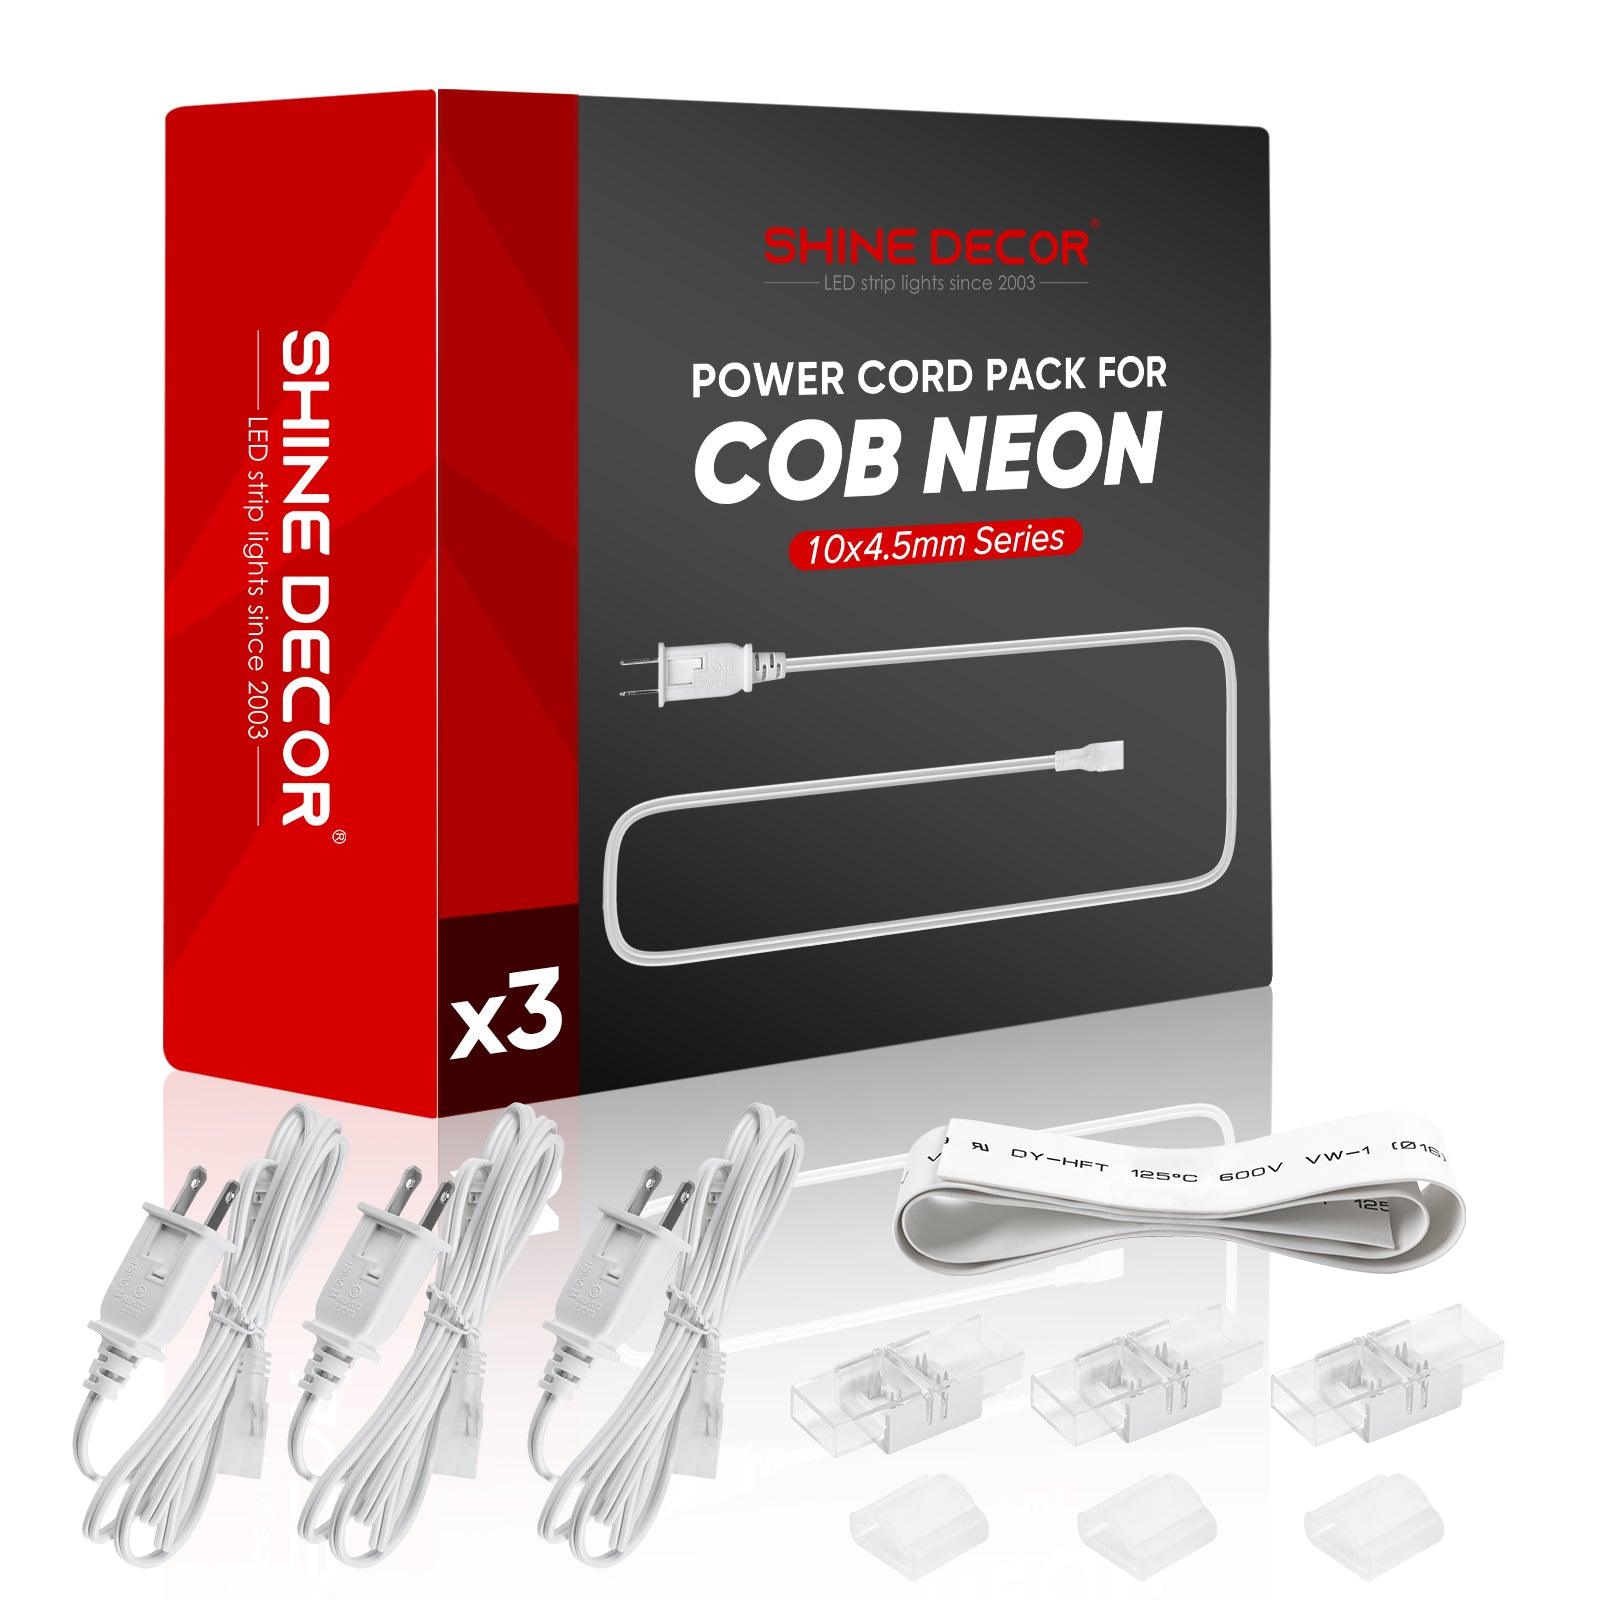 Extra Power Cord Pack 6FT for 120V Flexible COB LED Neon Rope Light 10x4.5mm - Shine Decor